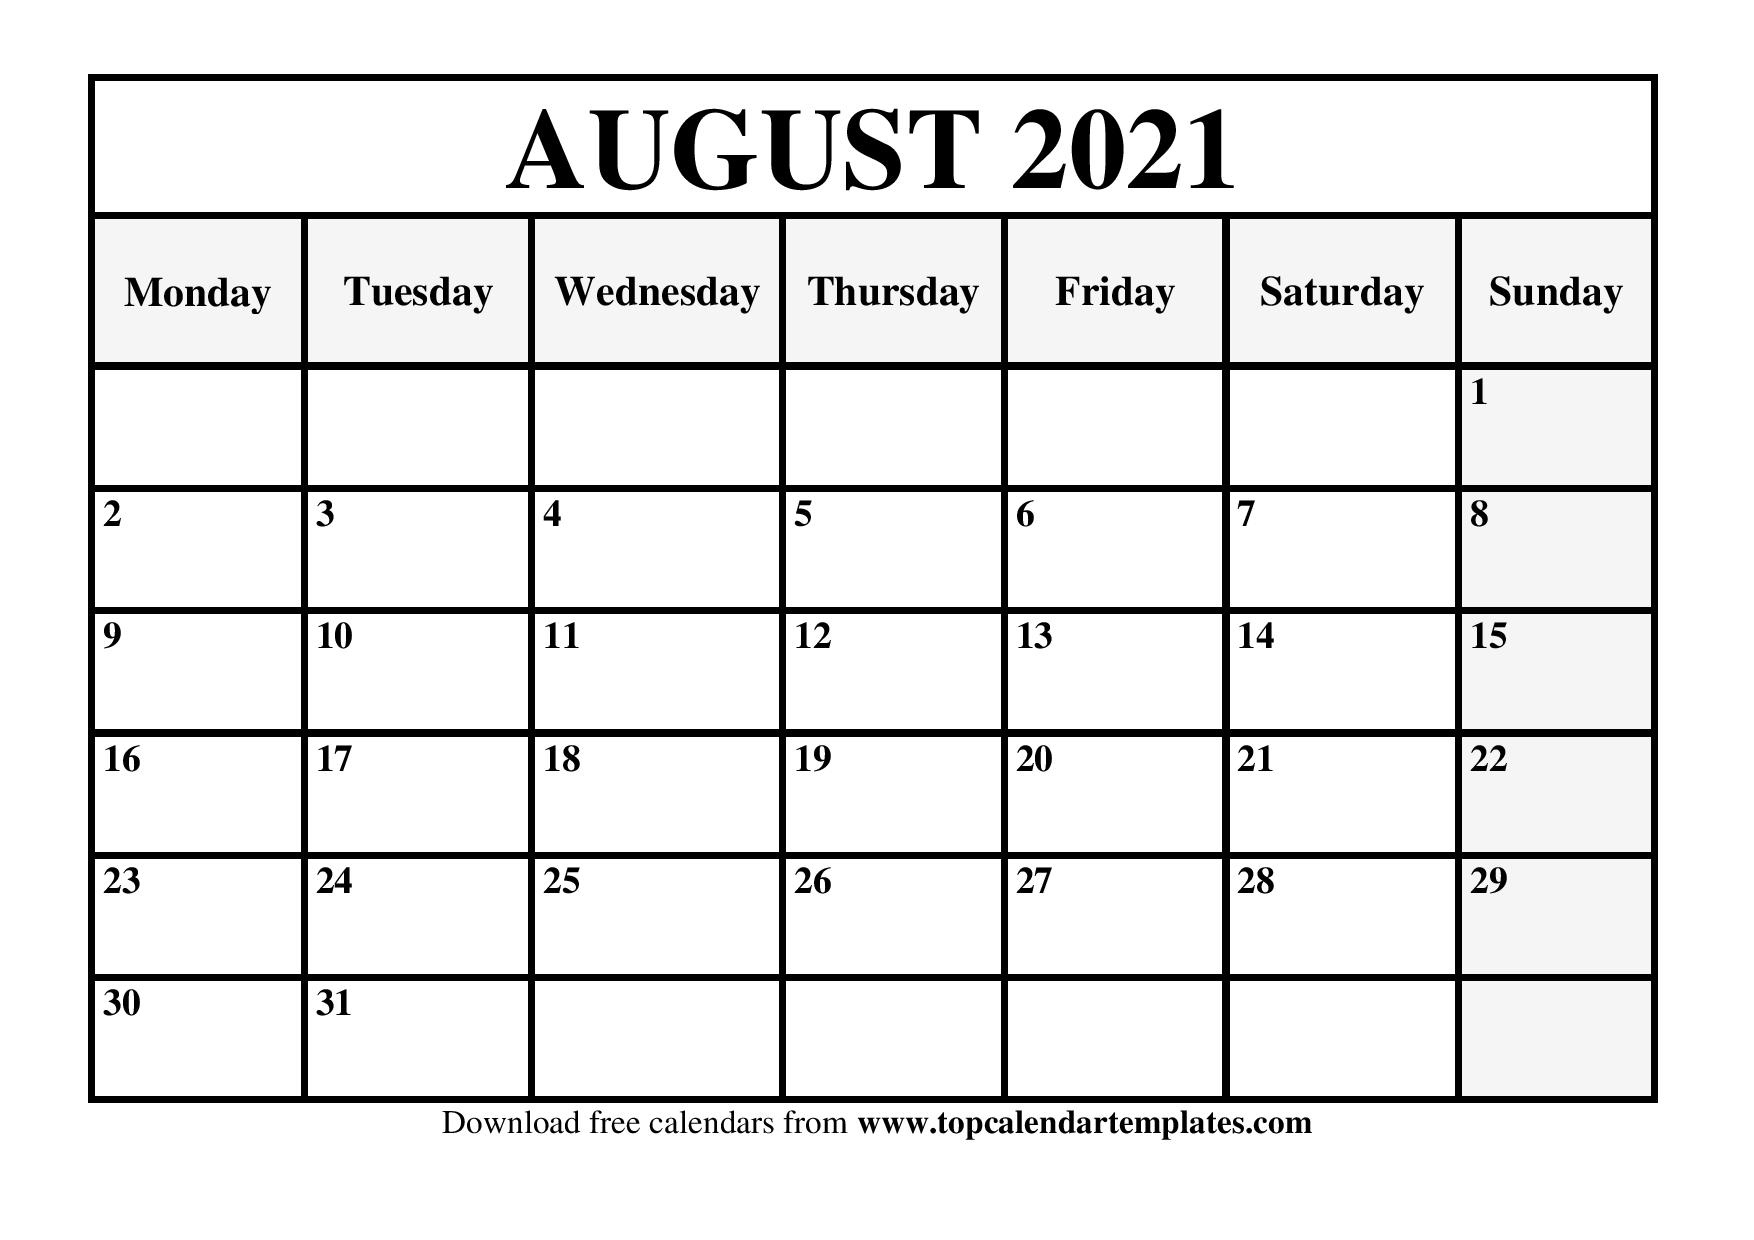 August 2021 Printable Calendar - Monthly Templates Calendar Ortodox August 2021 Patriarhie